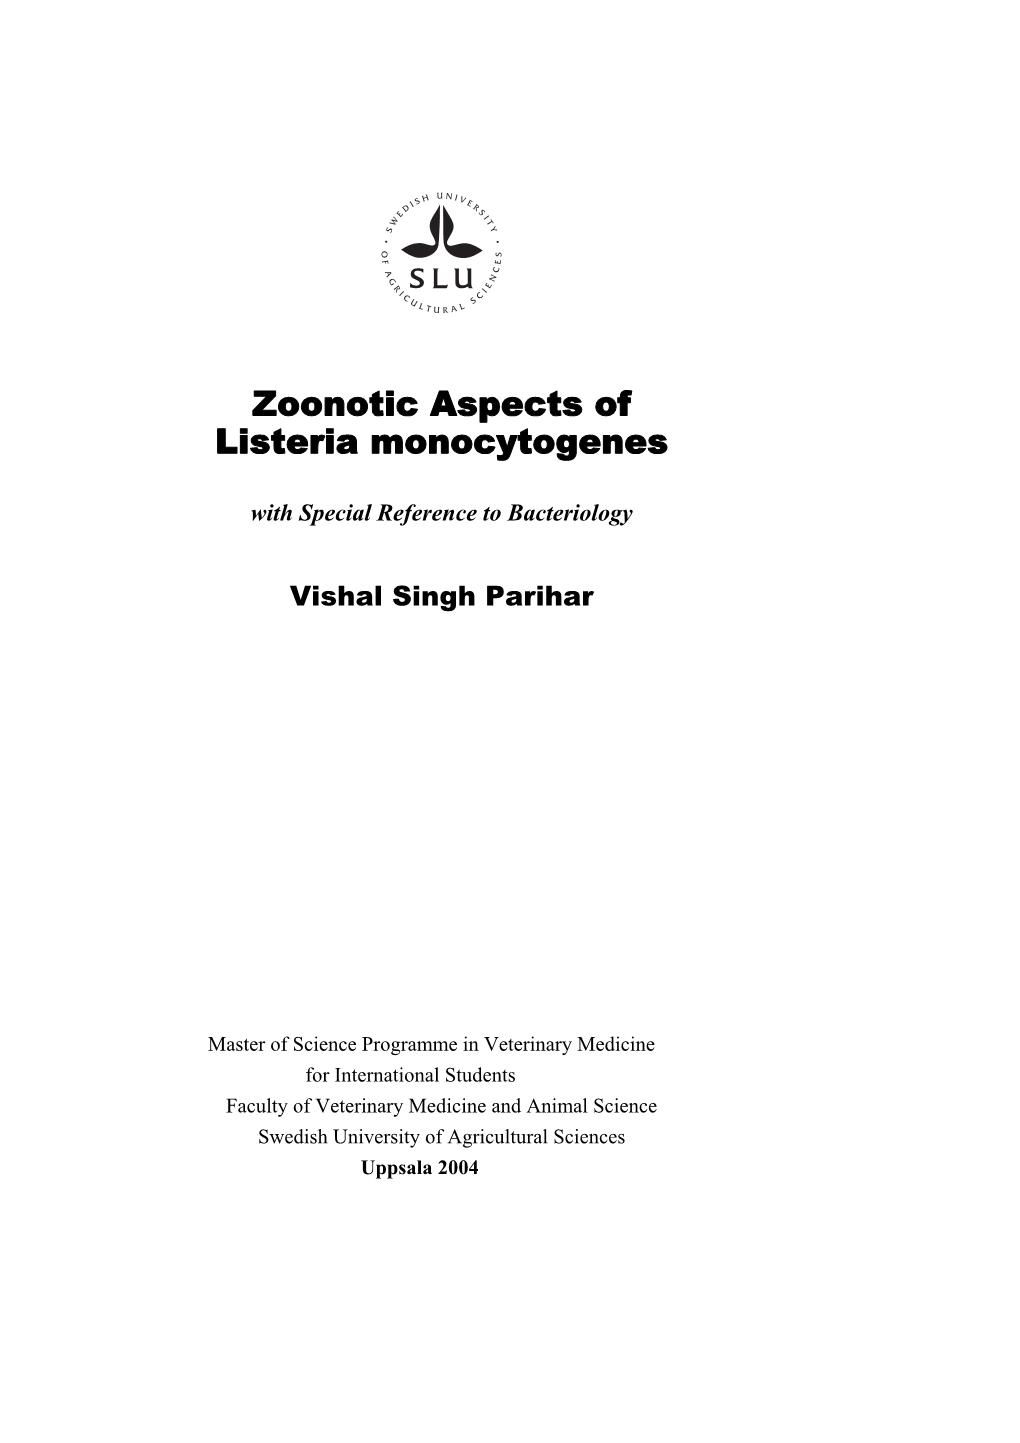 Parihar VS (2004) Zoonotic Aspects of Listeria Monocytogenes. Master Of